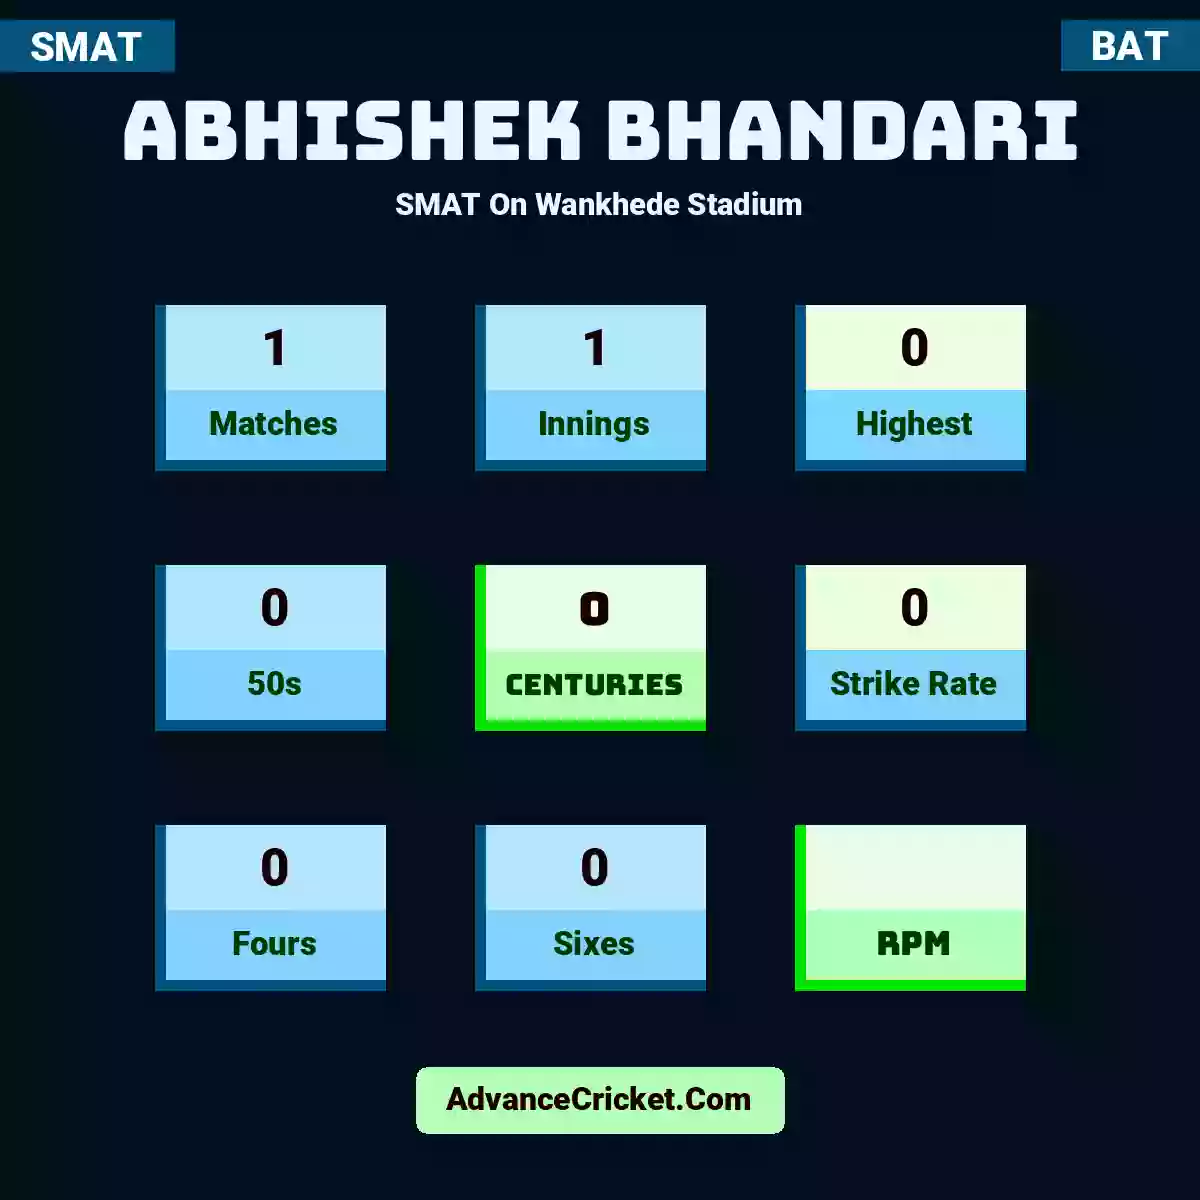 Abhishek Bhandari SMAT  On Wankhede Stadium, Abhishek Bhandari played 1 matches, scored 0 runs as highest, 0 half-centuries, and 0 centuries, with a strike rate of 0. A.Bhandari hit 0 fours and 0 sixes.